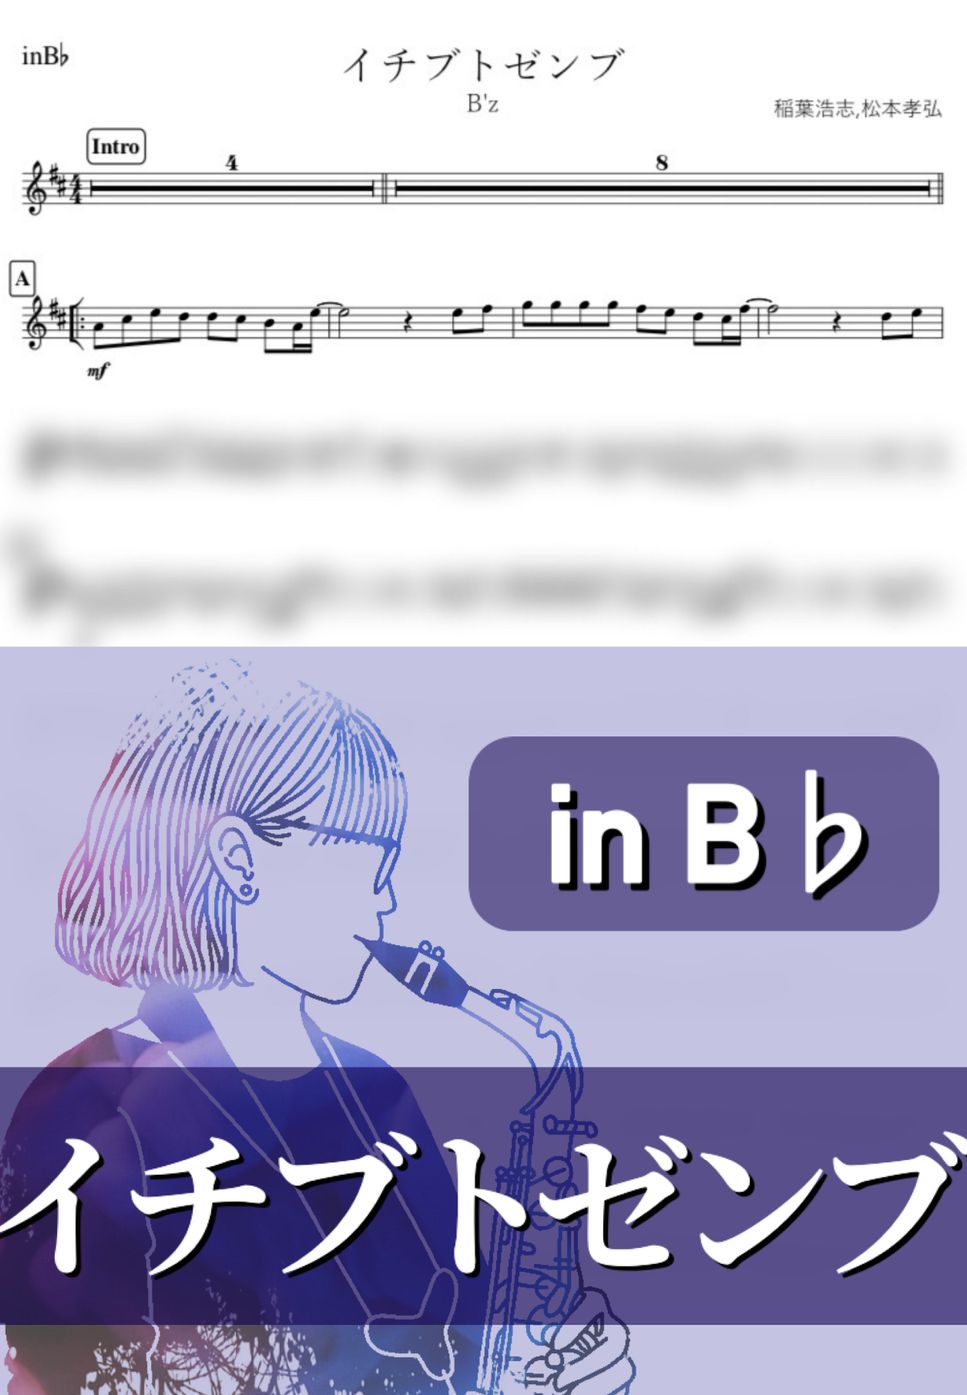 B'z - イチブトゼンブ (B♭) by kanamusic